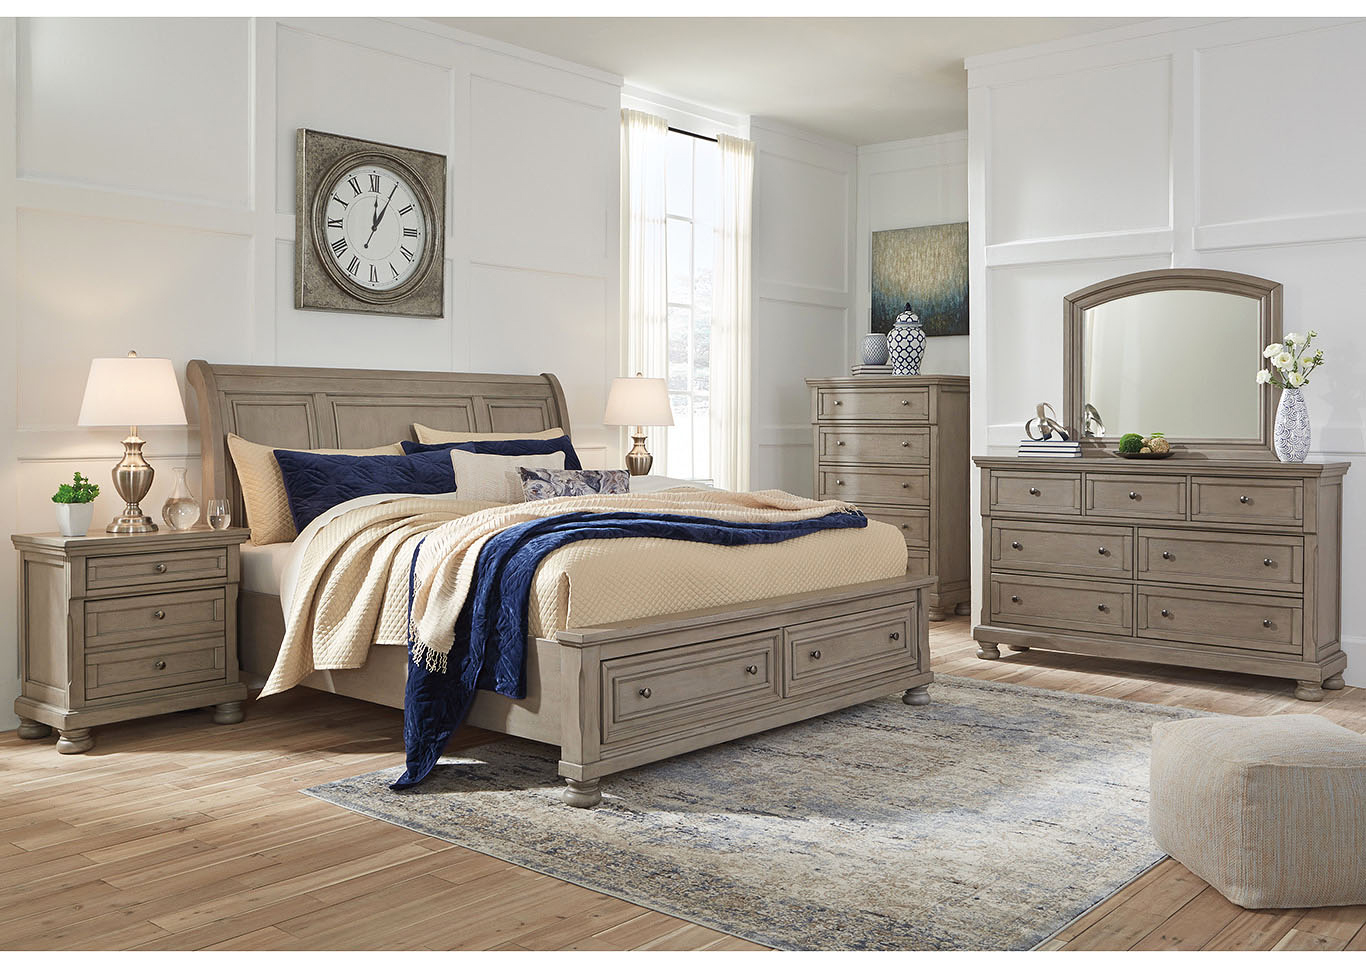 bedroom furniture on sale in ottawa